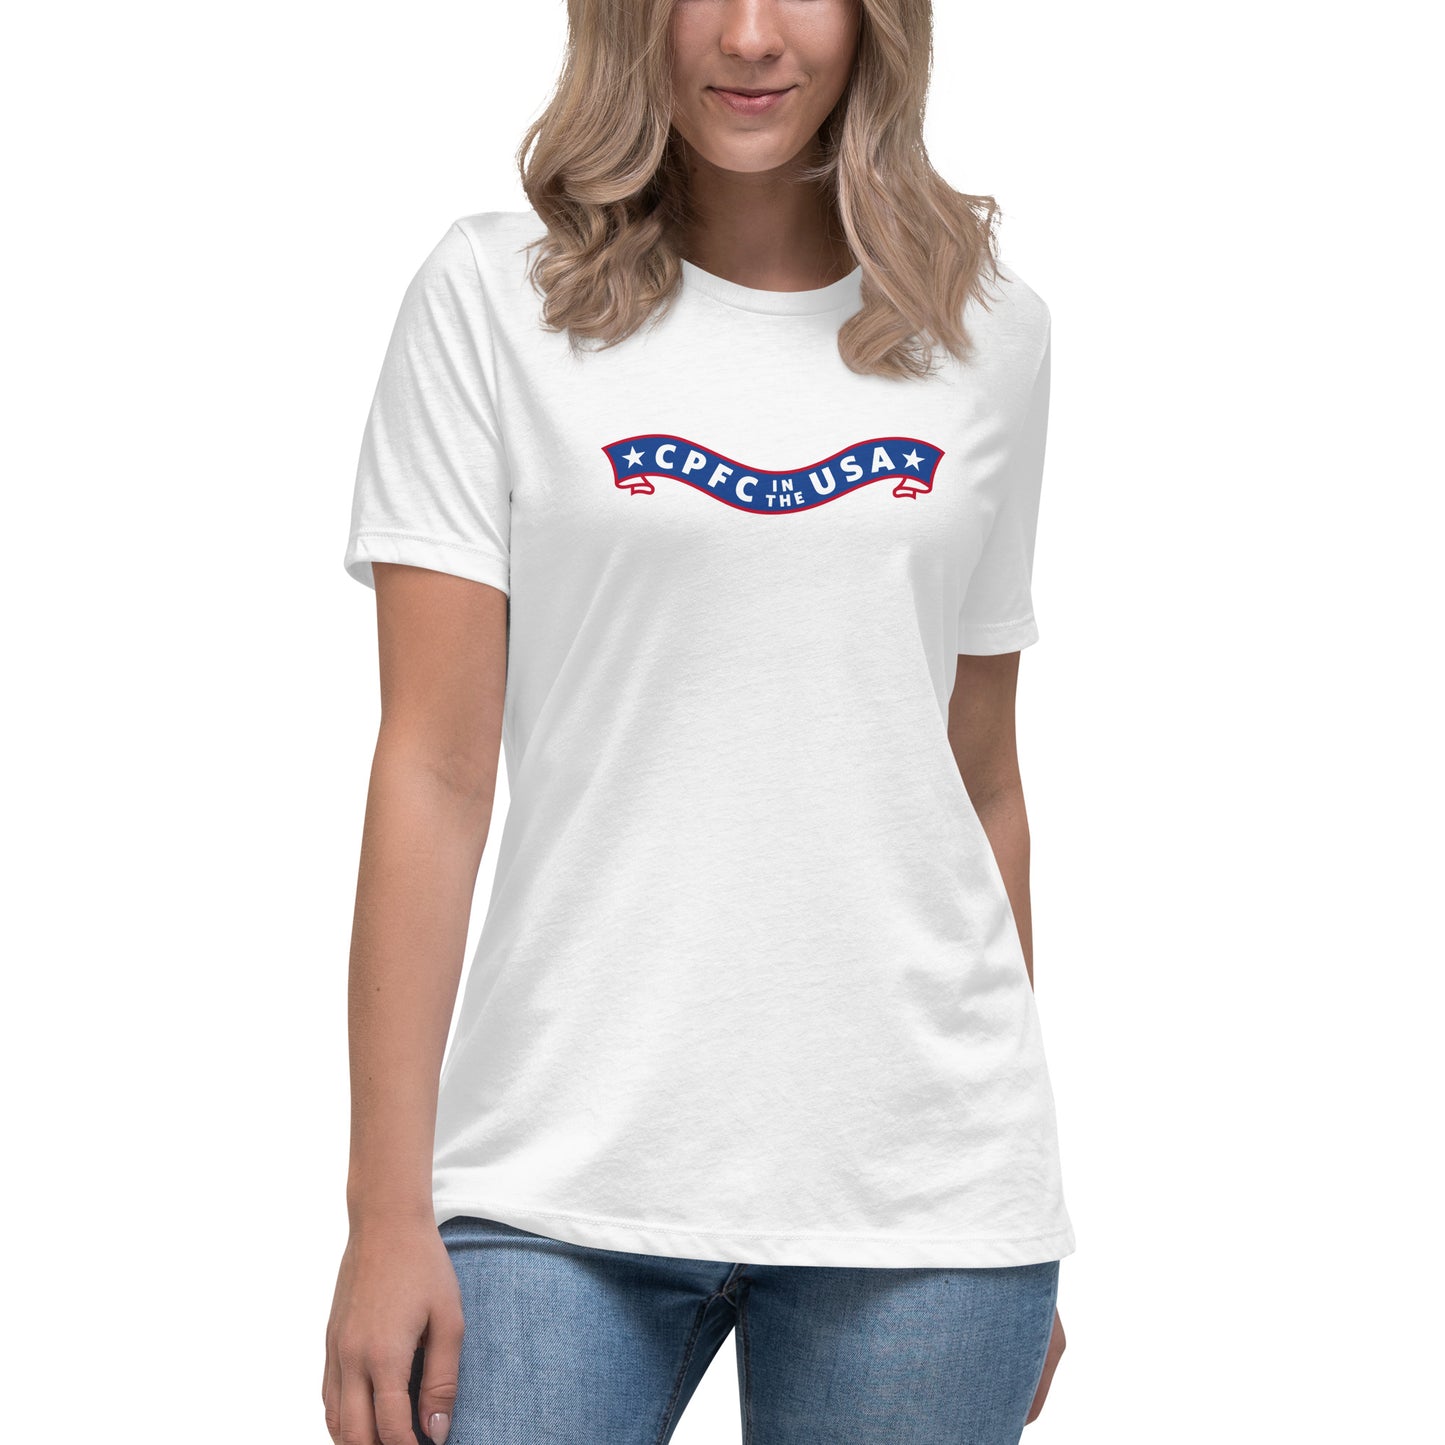 CPFC USA Ribbon Women's Relaxed T-Shirt